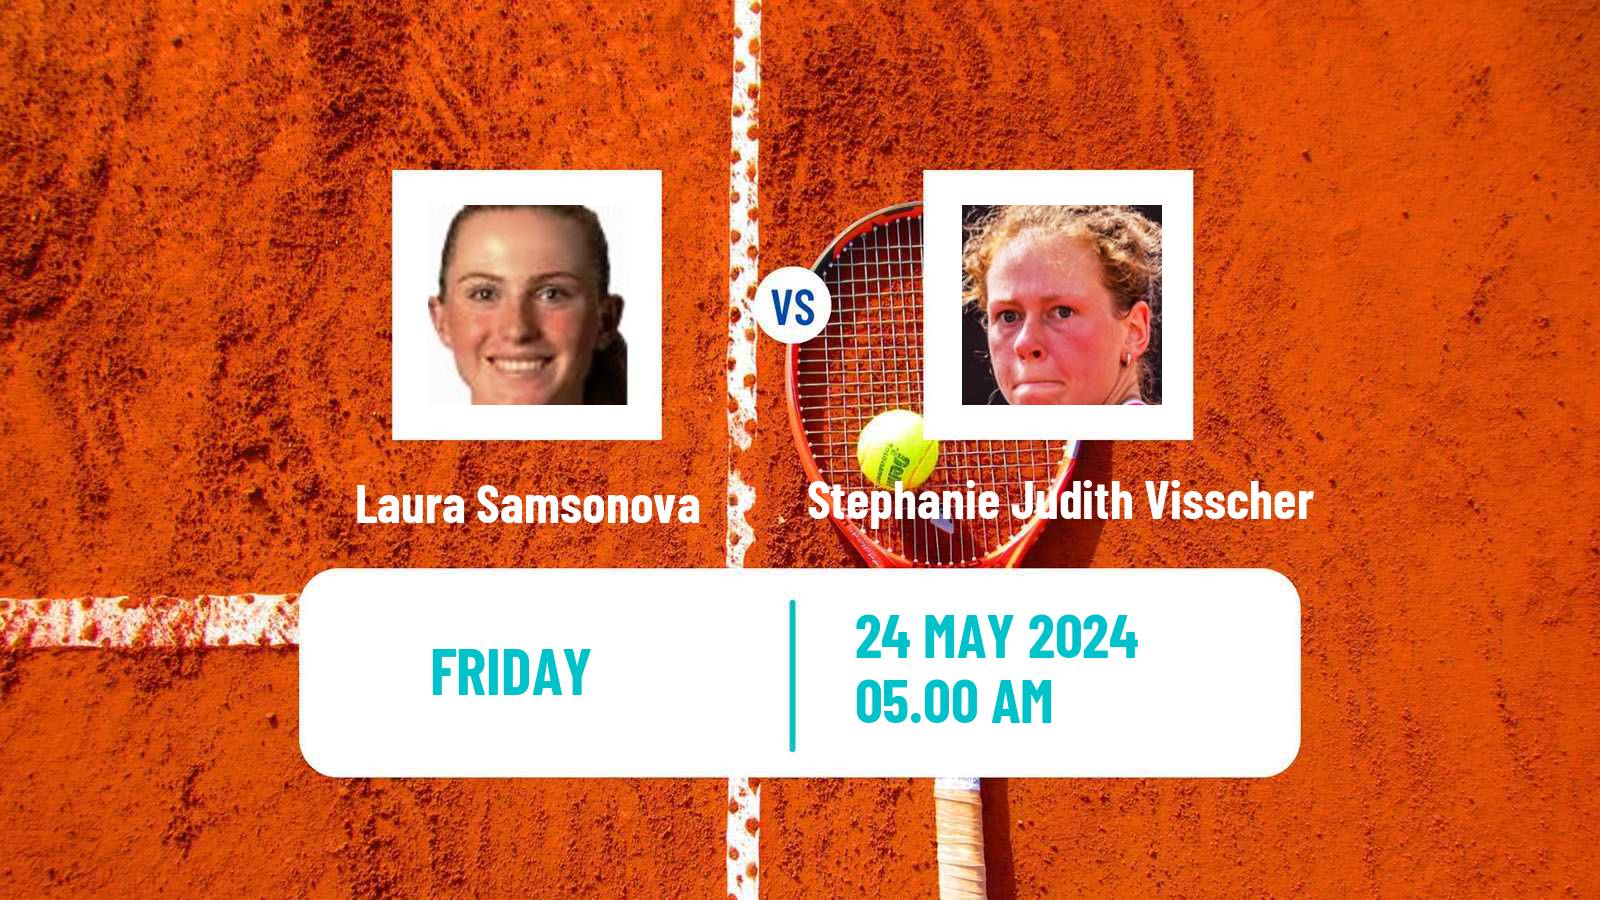 Tennis ITF W15 Bol Women Laura Samsonova - Stephanie Judith Visscher